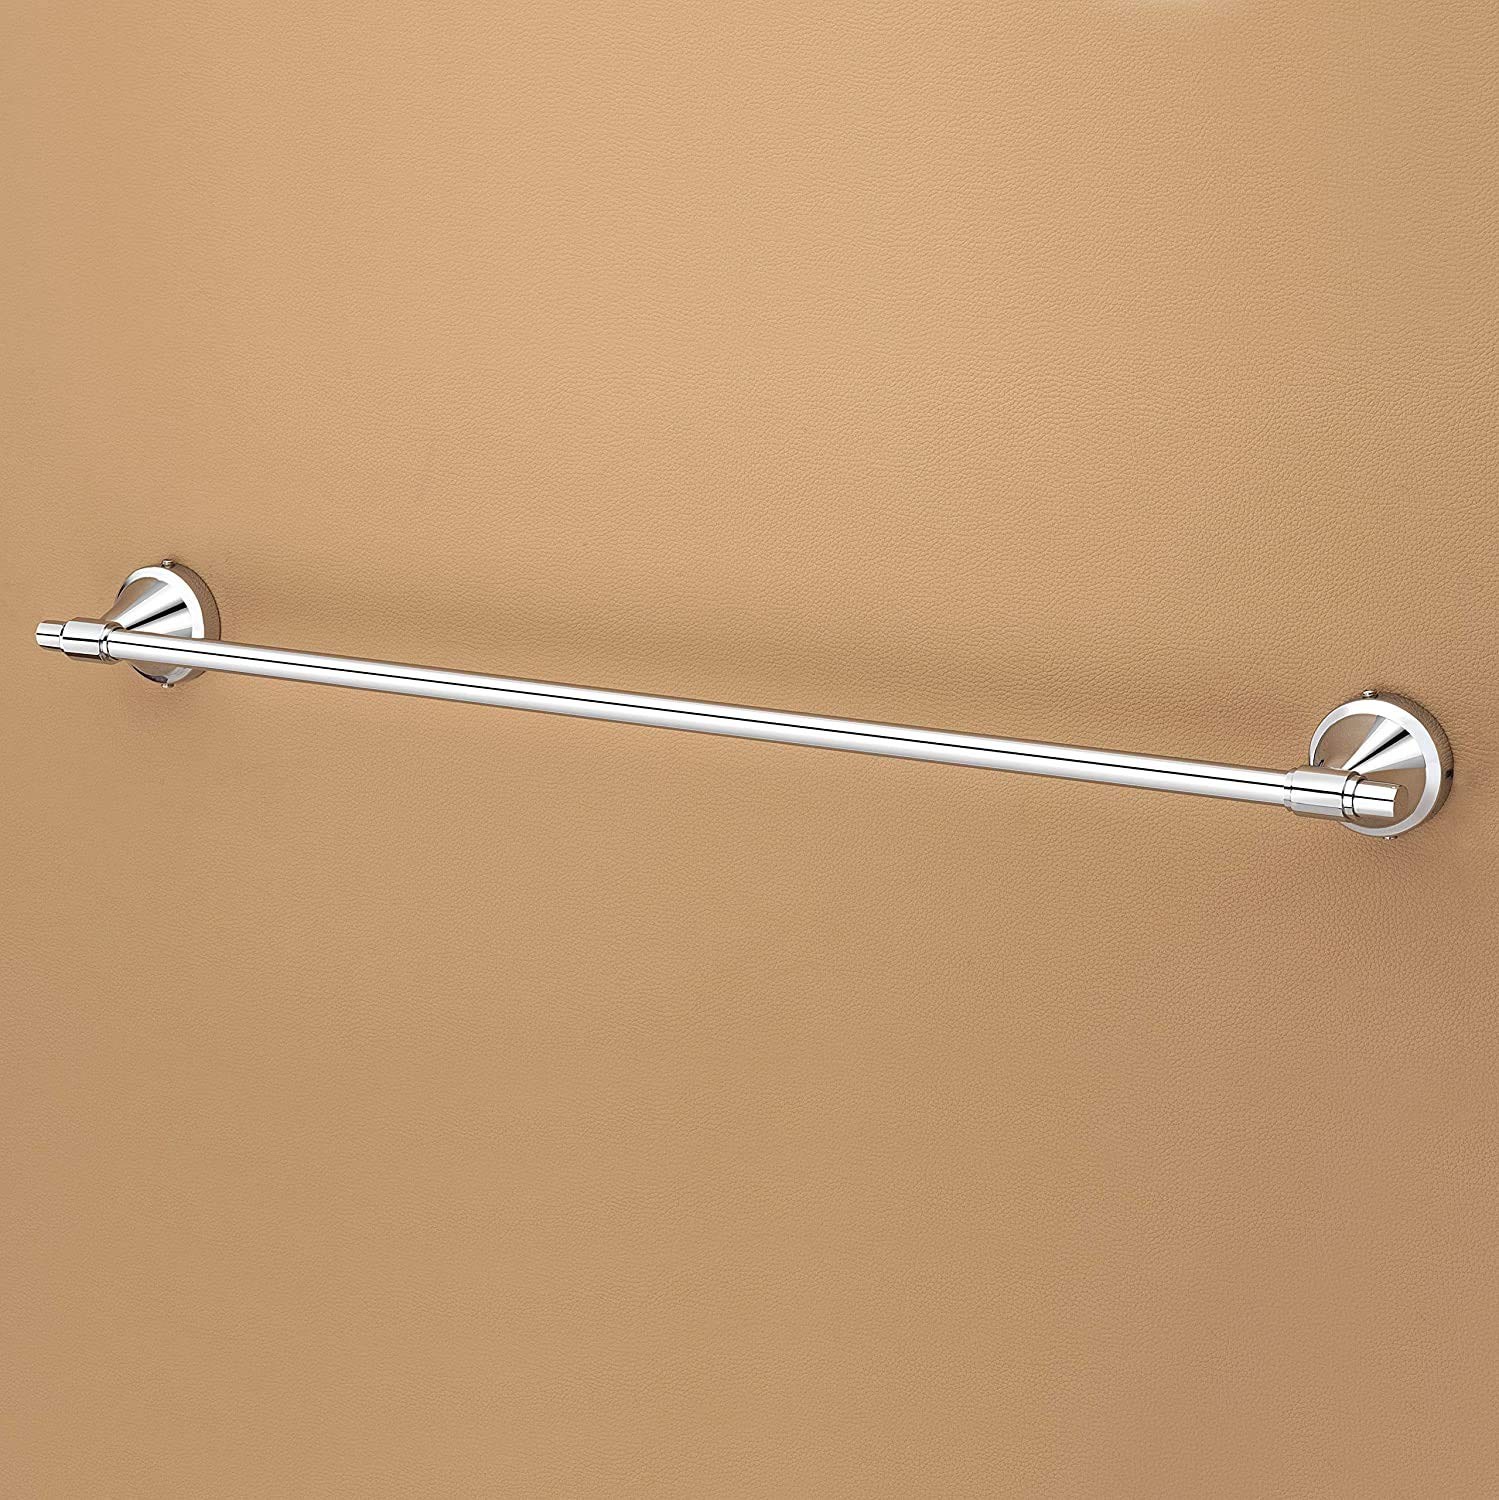 Plantex Stainless Steel 304 Grade Niko Towel Hanger for Bathroom/Towel Rod/Bar/Bathroom Accessories(24inch-Chrome) - Pack of 4